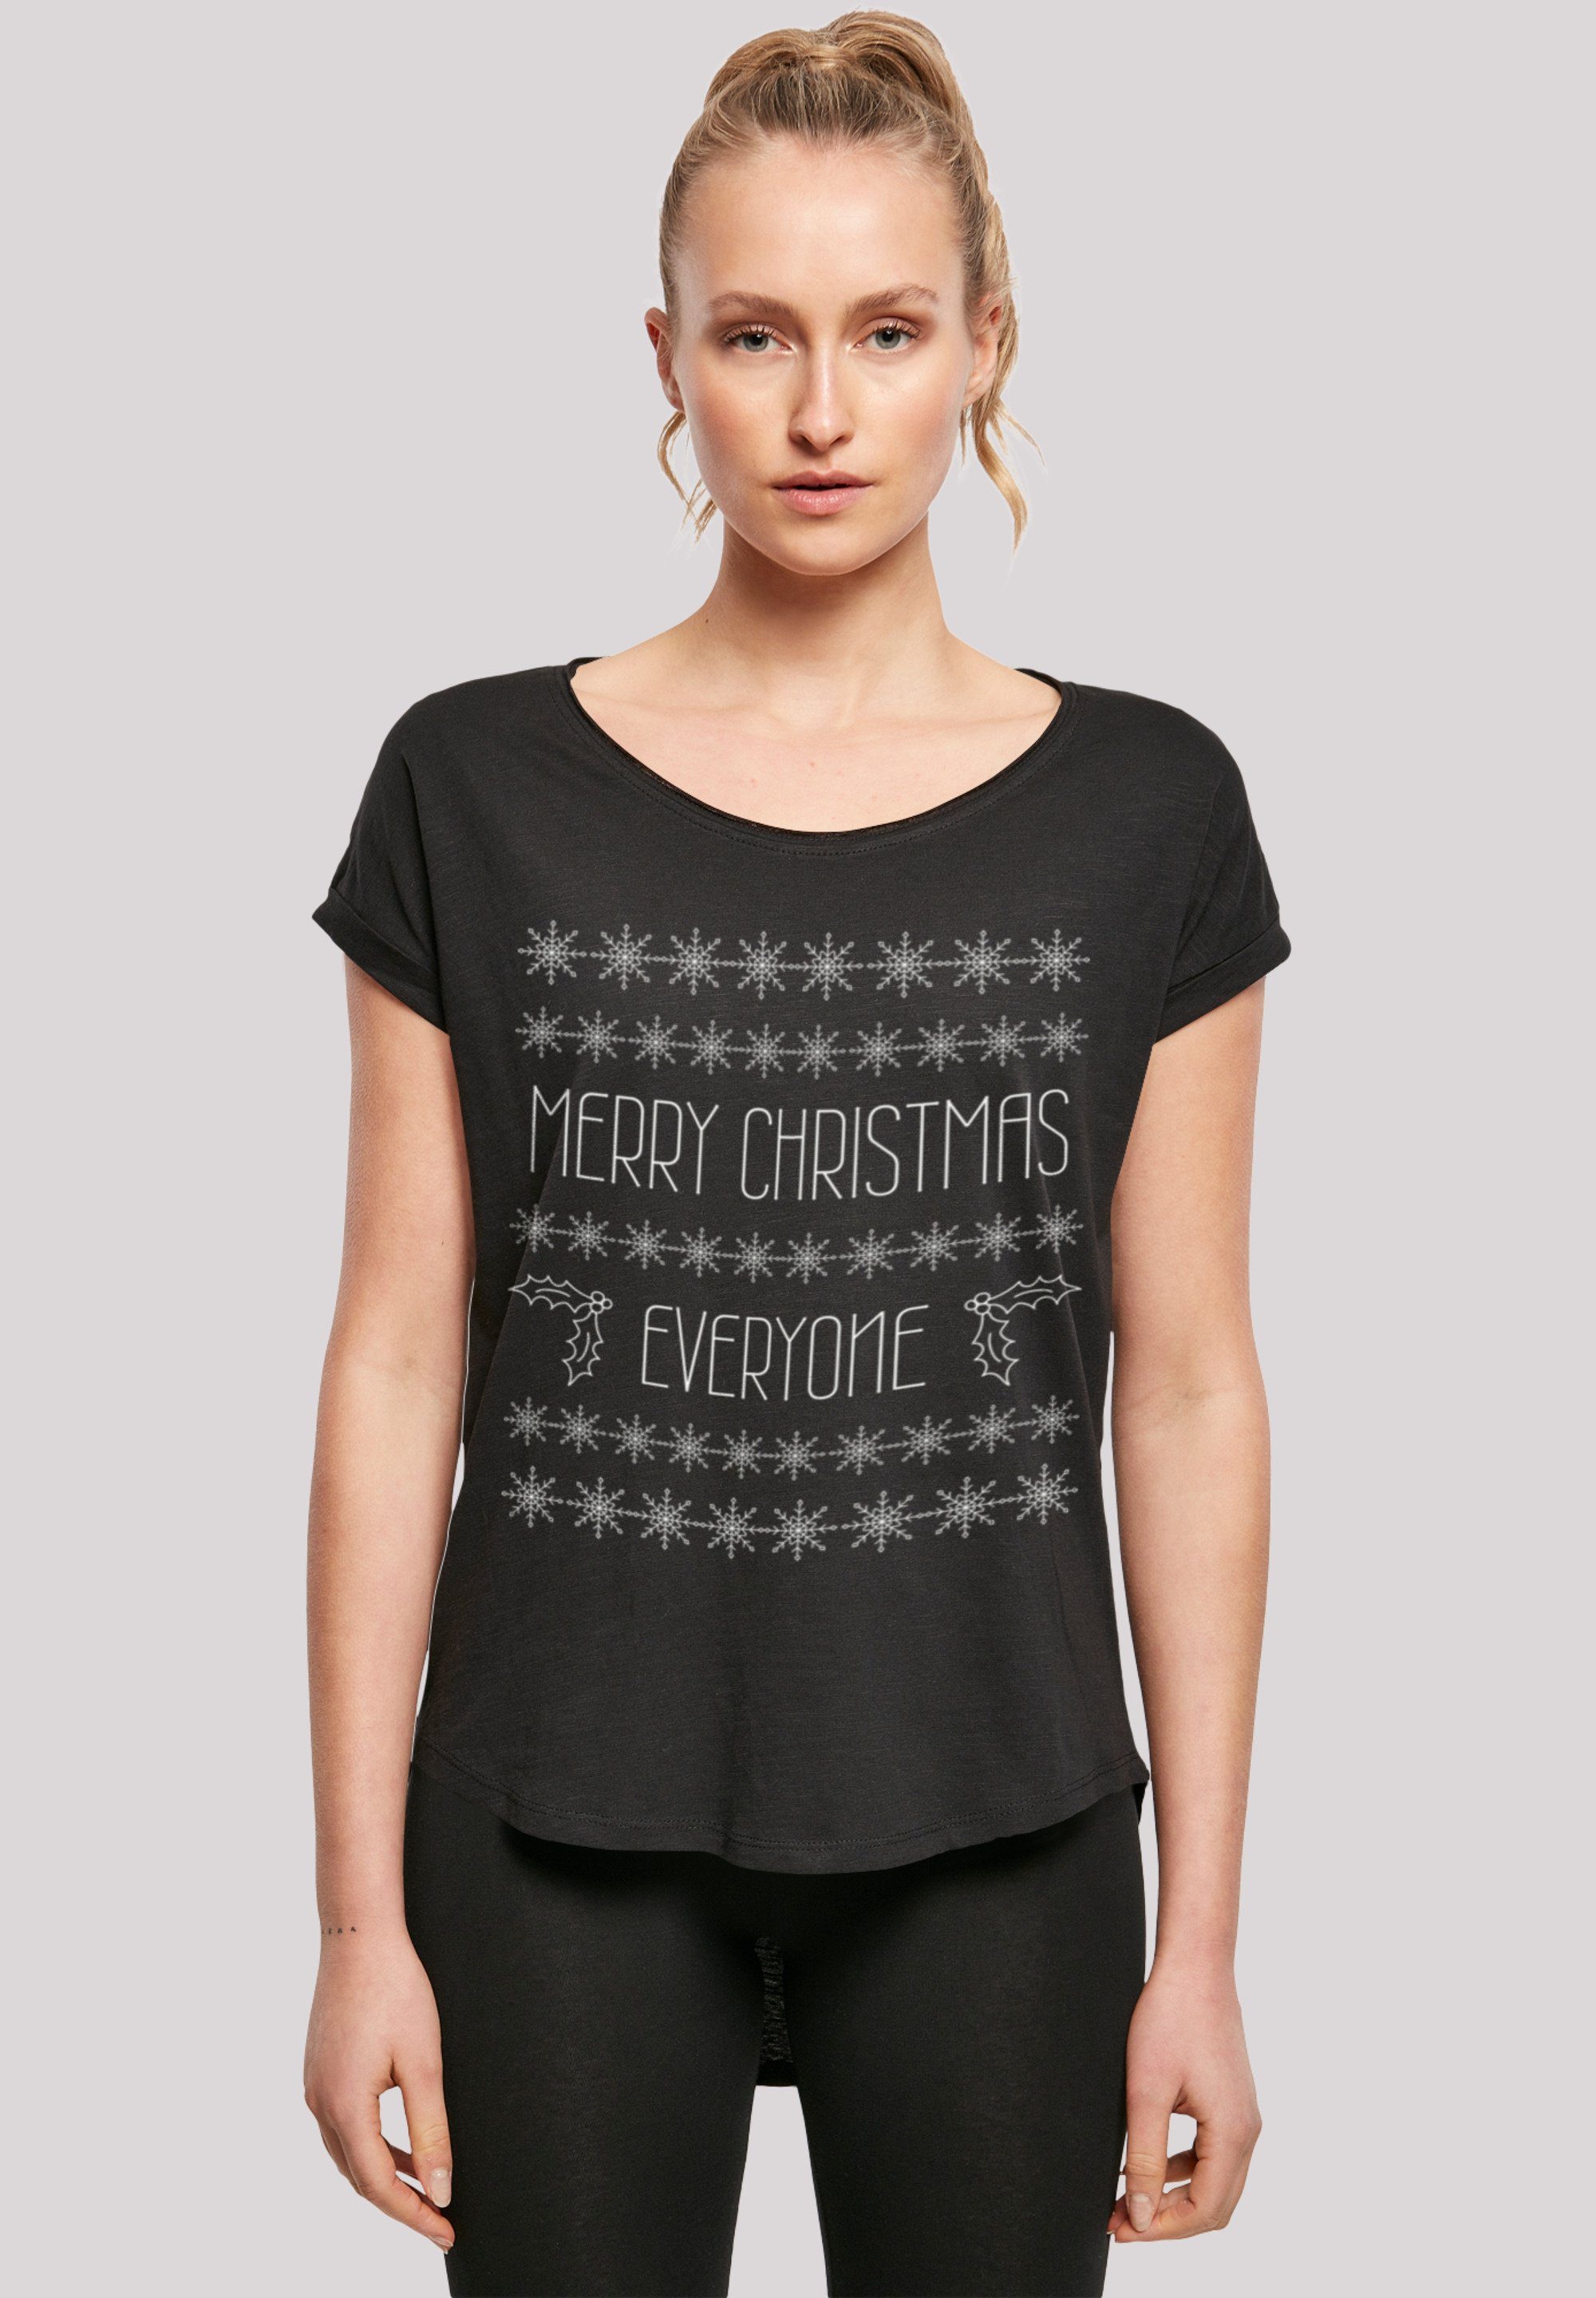 Print Everyone schwarz Christmas T-Shirt F4NT4STIC Merry Weihnachten